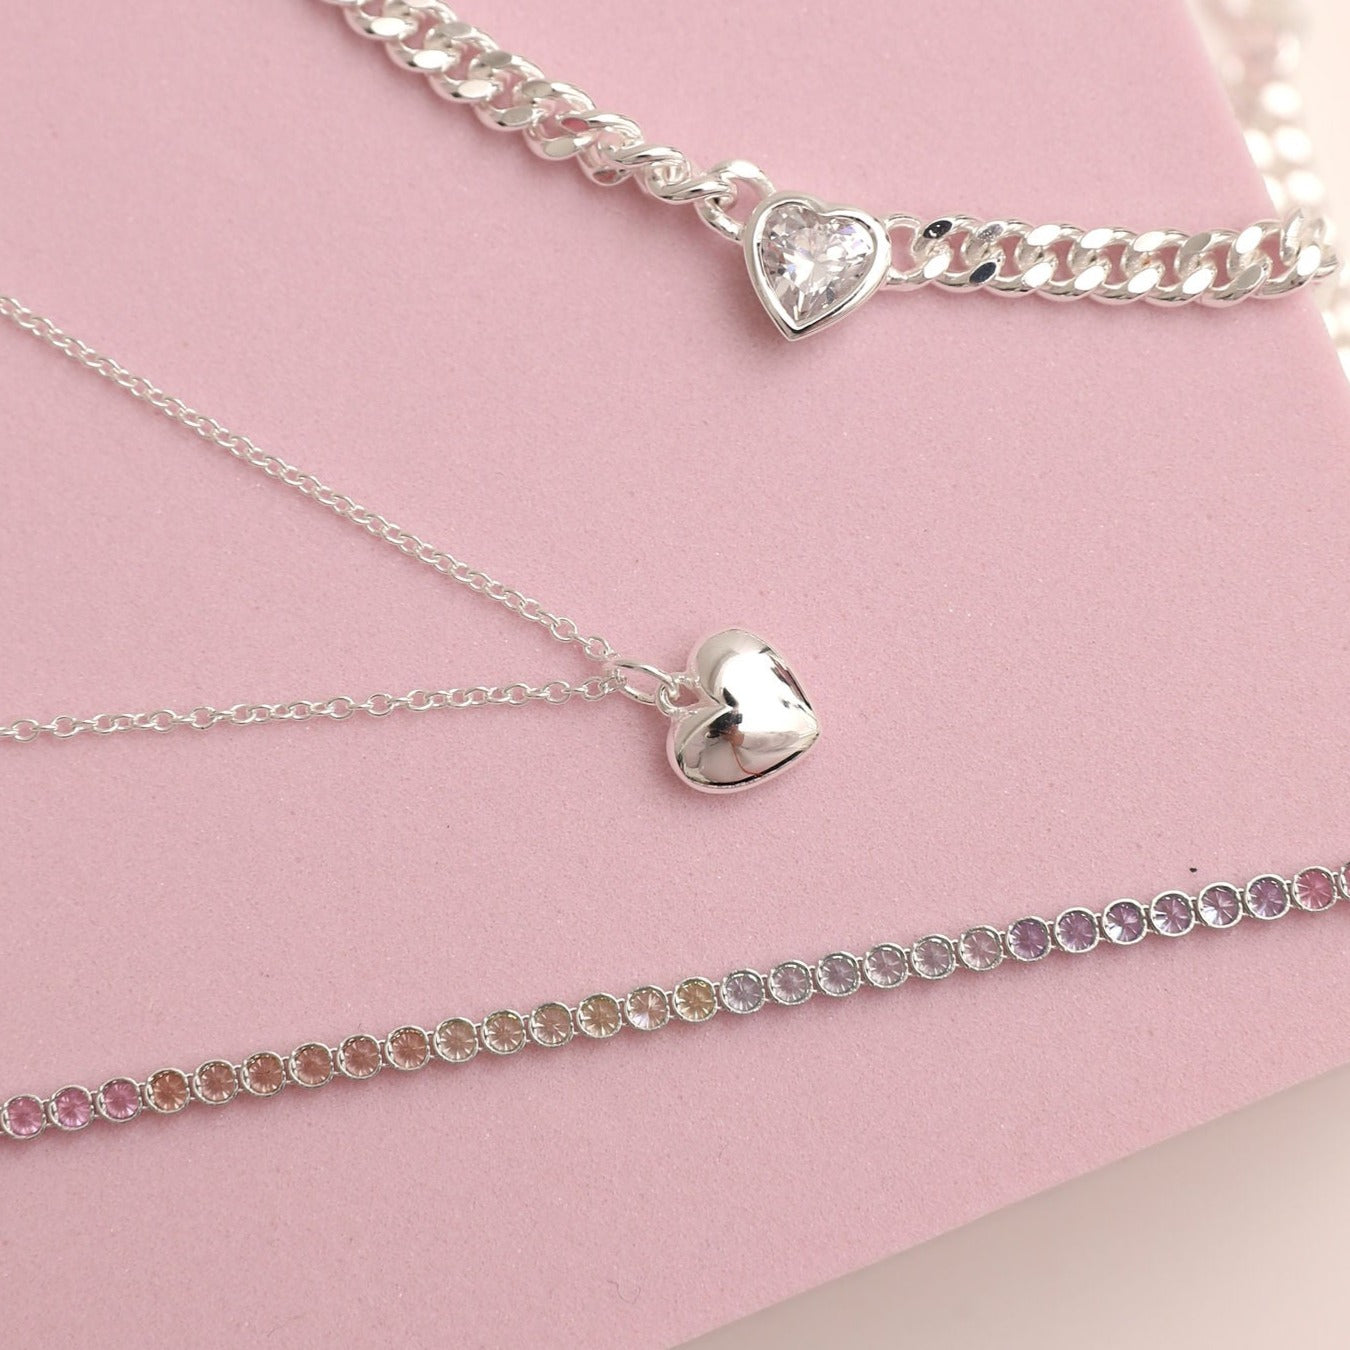 Bubble Heart Necklace Silver